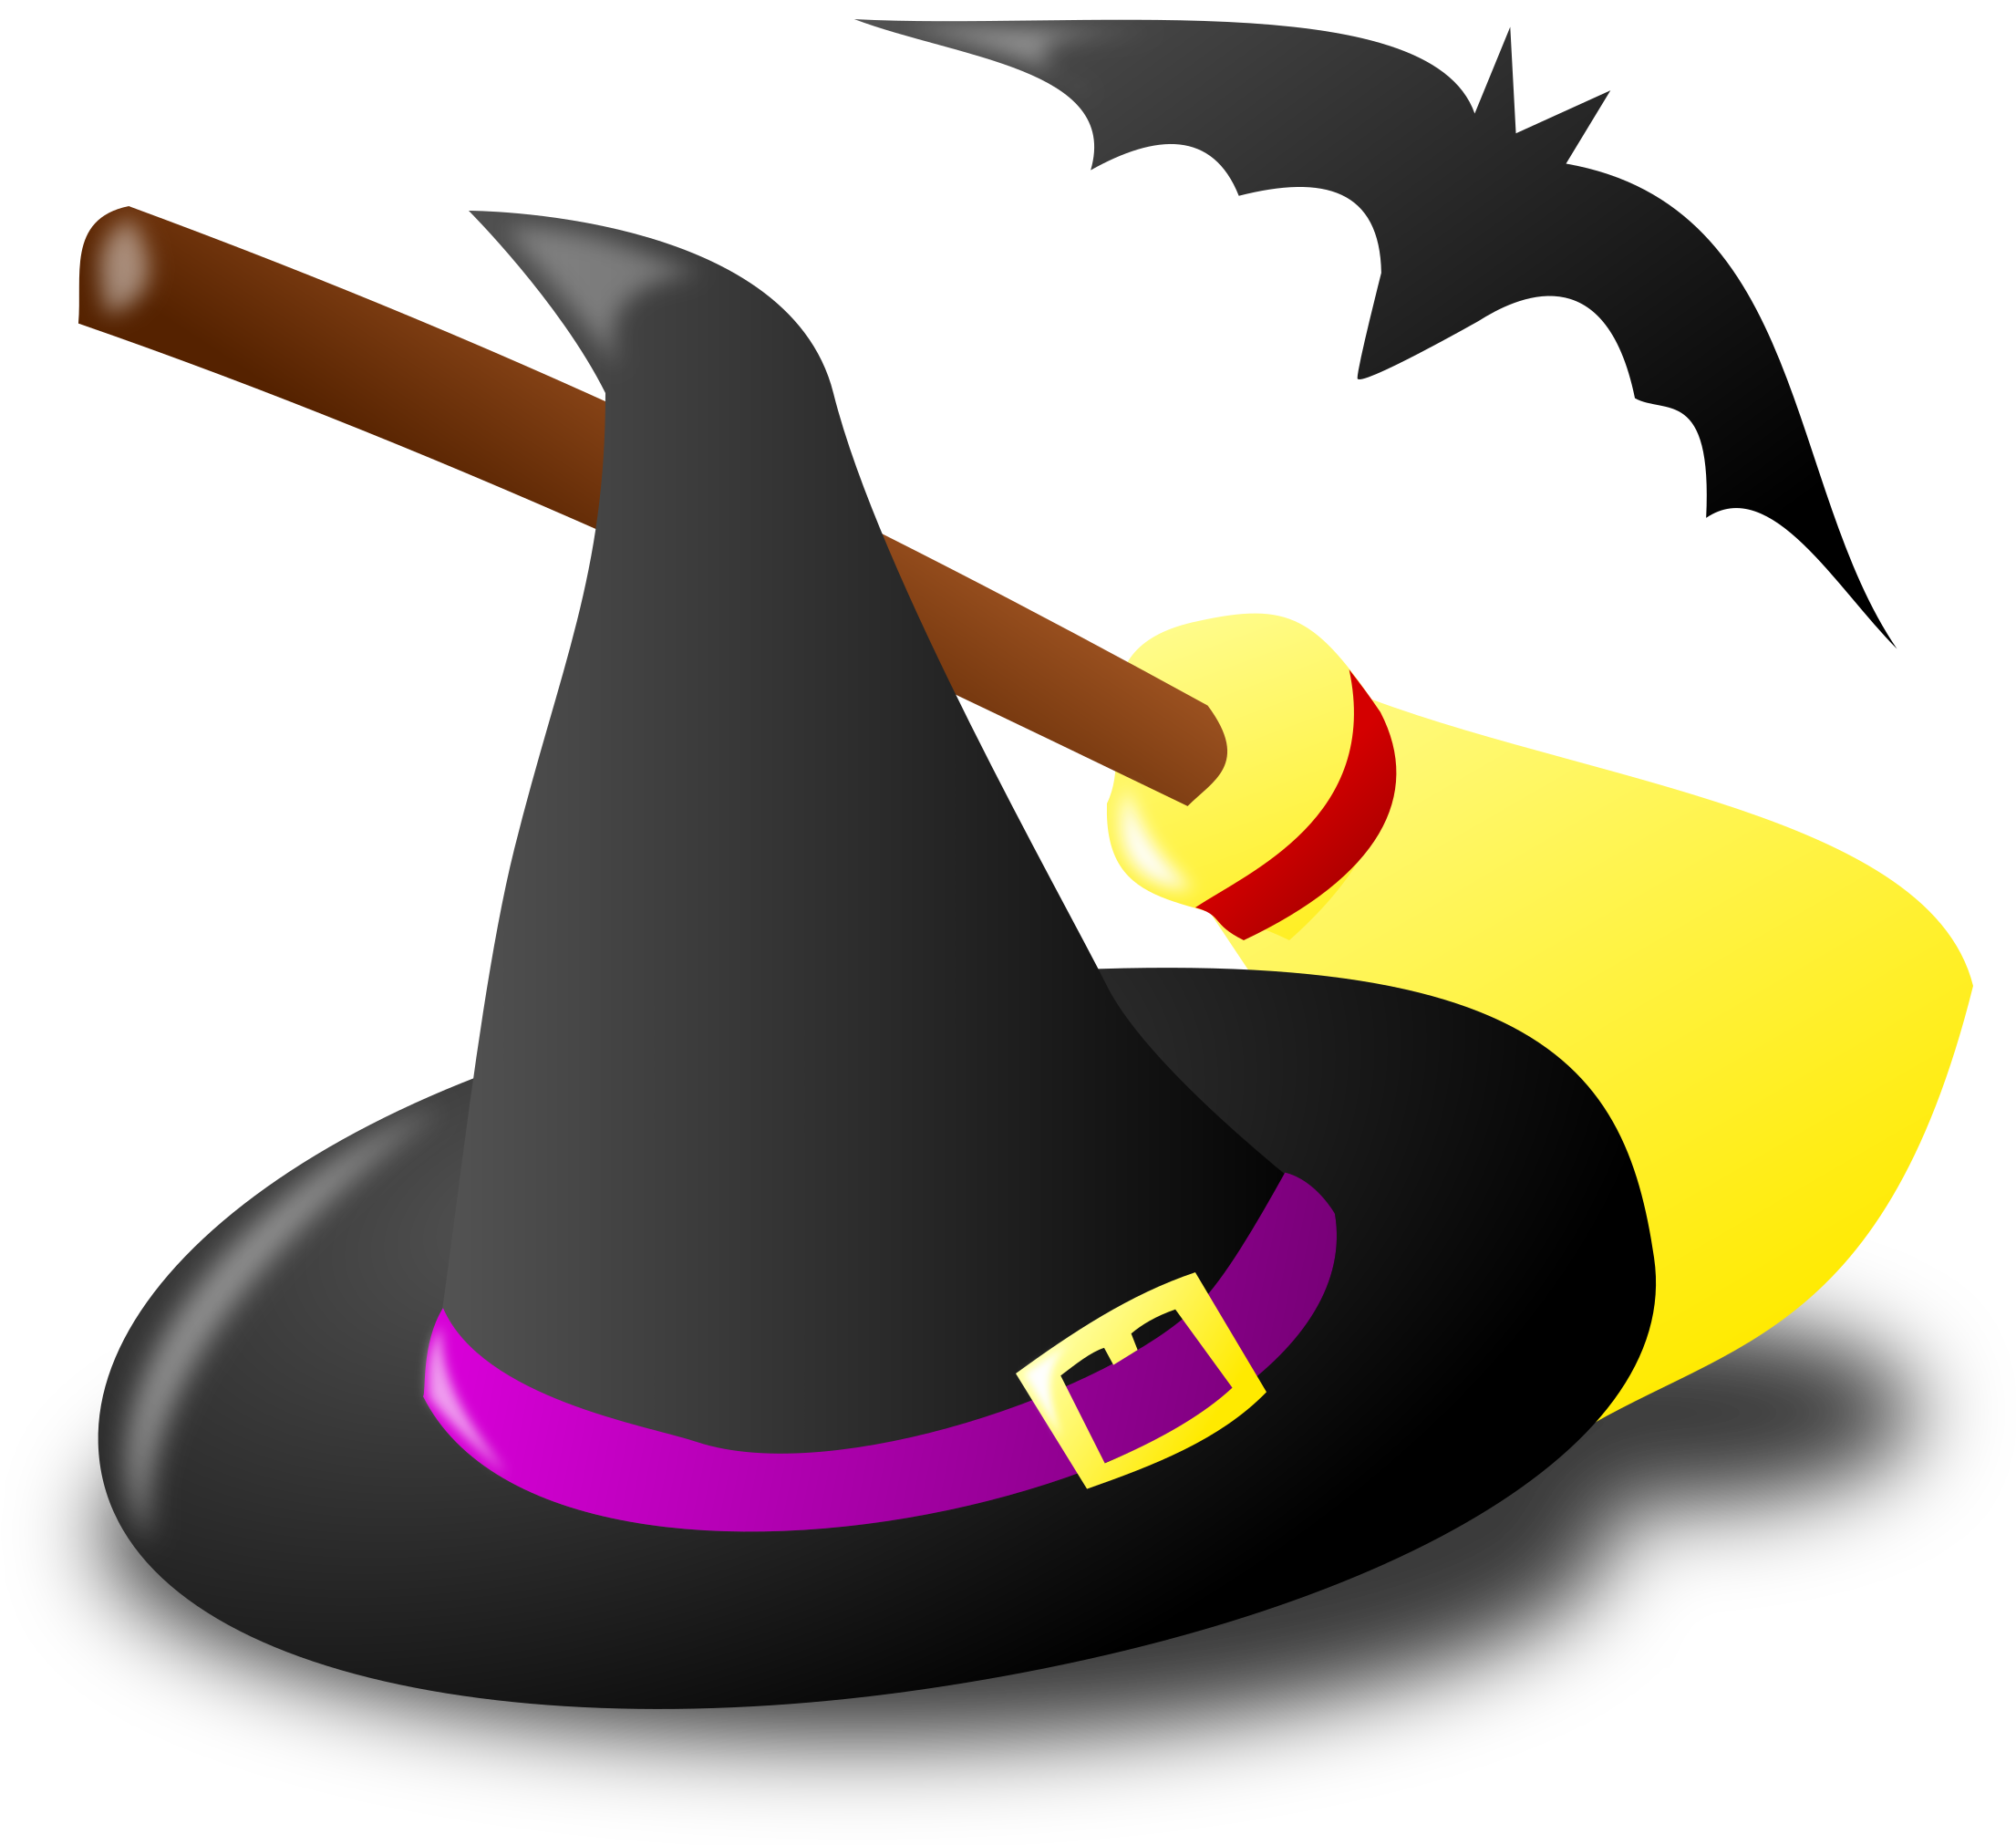 Halloween Bat Icons - Halloween Bat Icons (2400x2400)